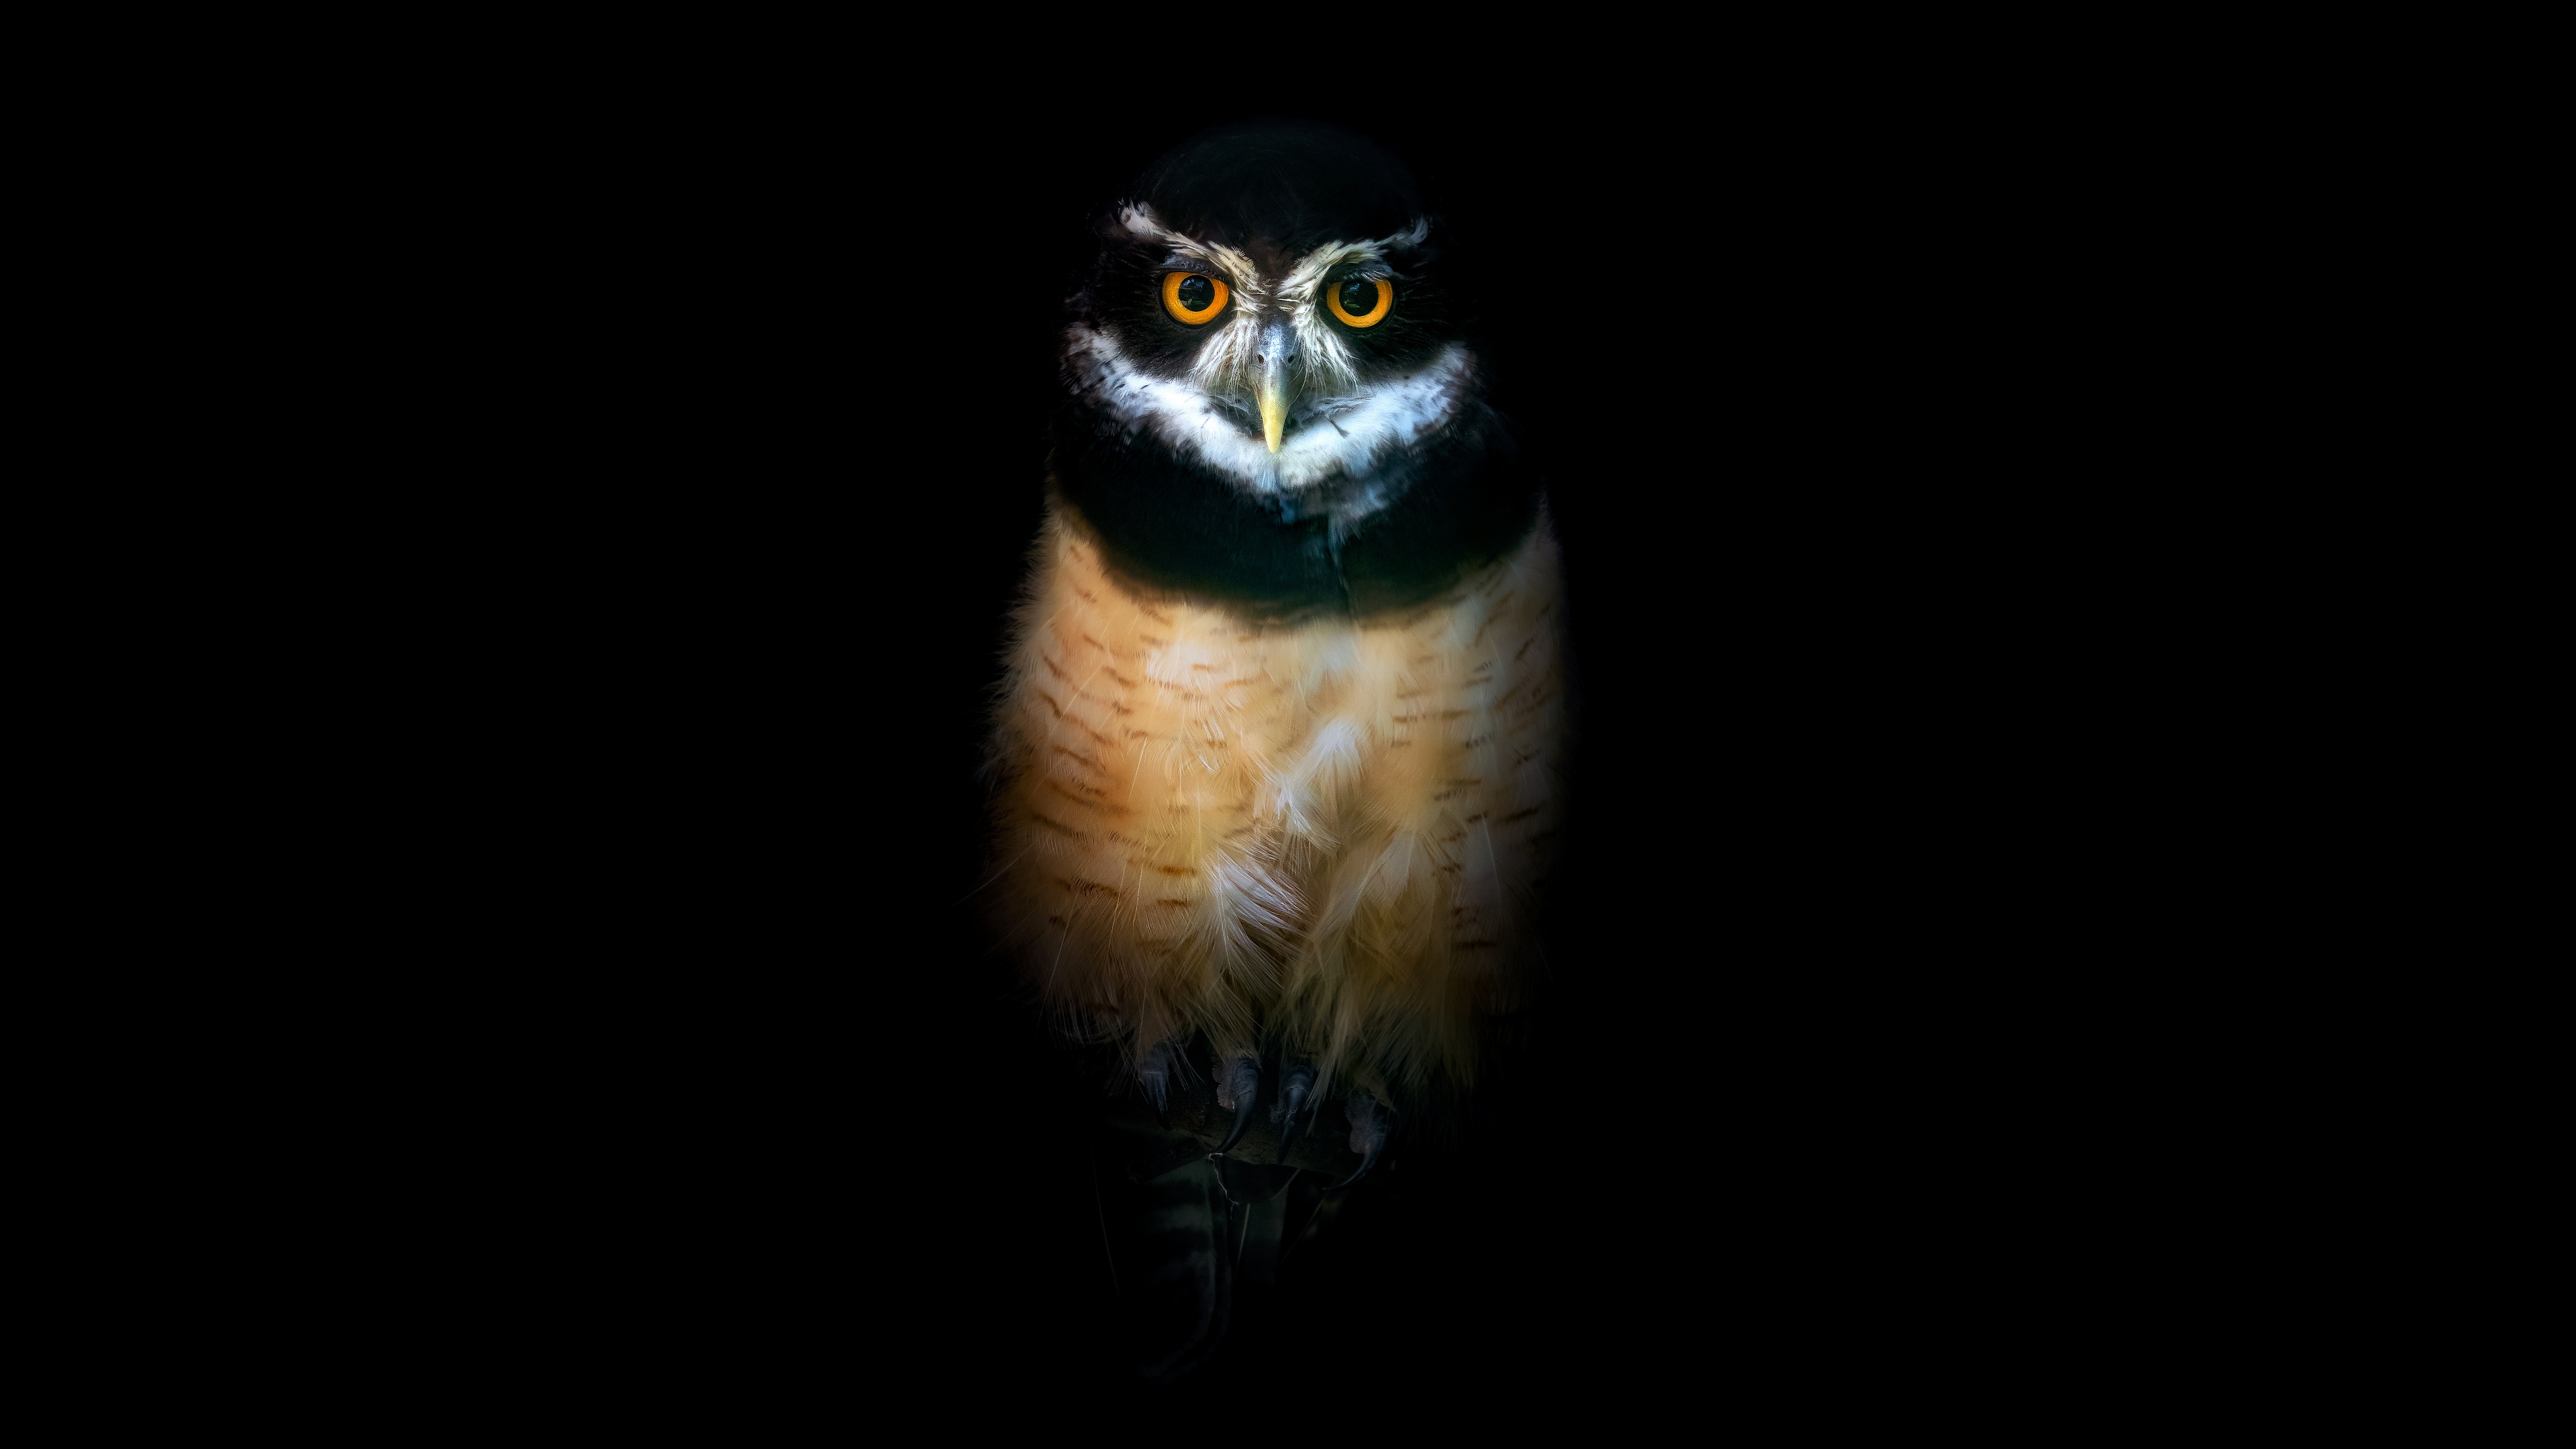 Tiny Owl 4K wallpaper download